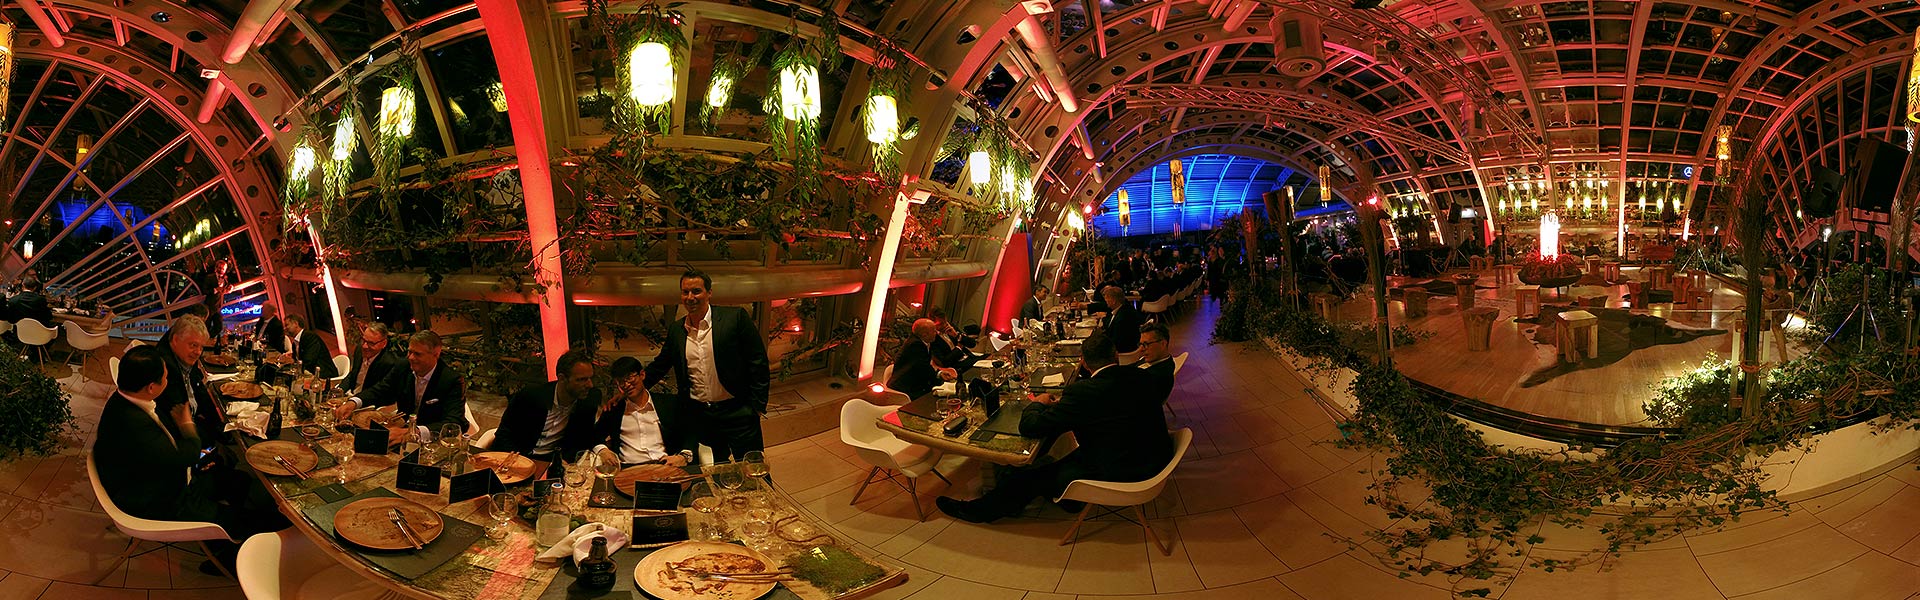 Samsung IFA KaDeWe 2015 Innovating Evolution Next is Now Schaufenster Atrium VIP Dinner Inner Circle Event Gäste